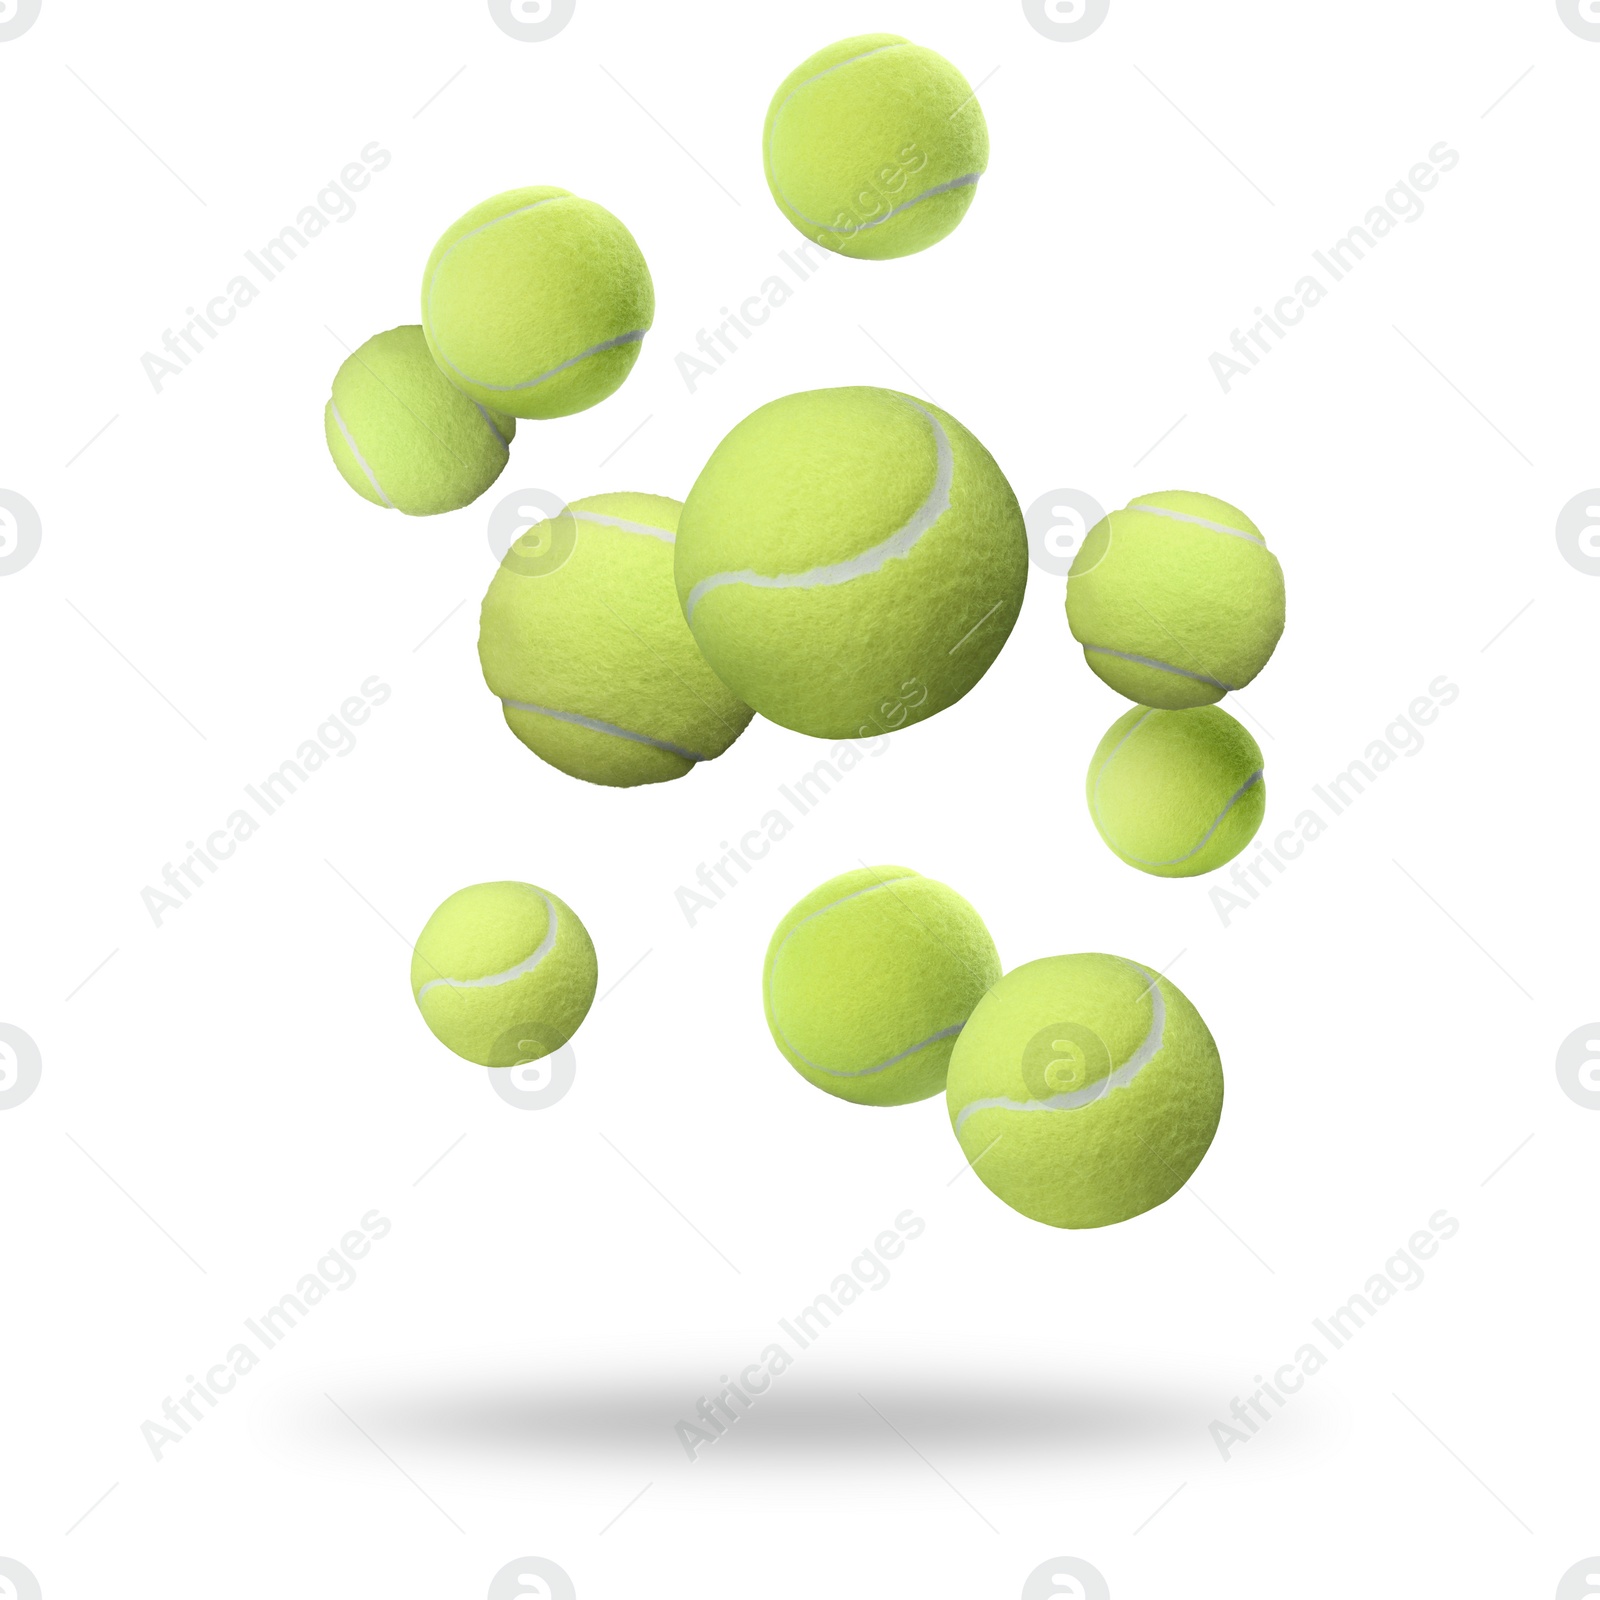 Image of Many tennis balls falling on white background